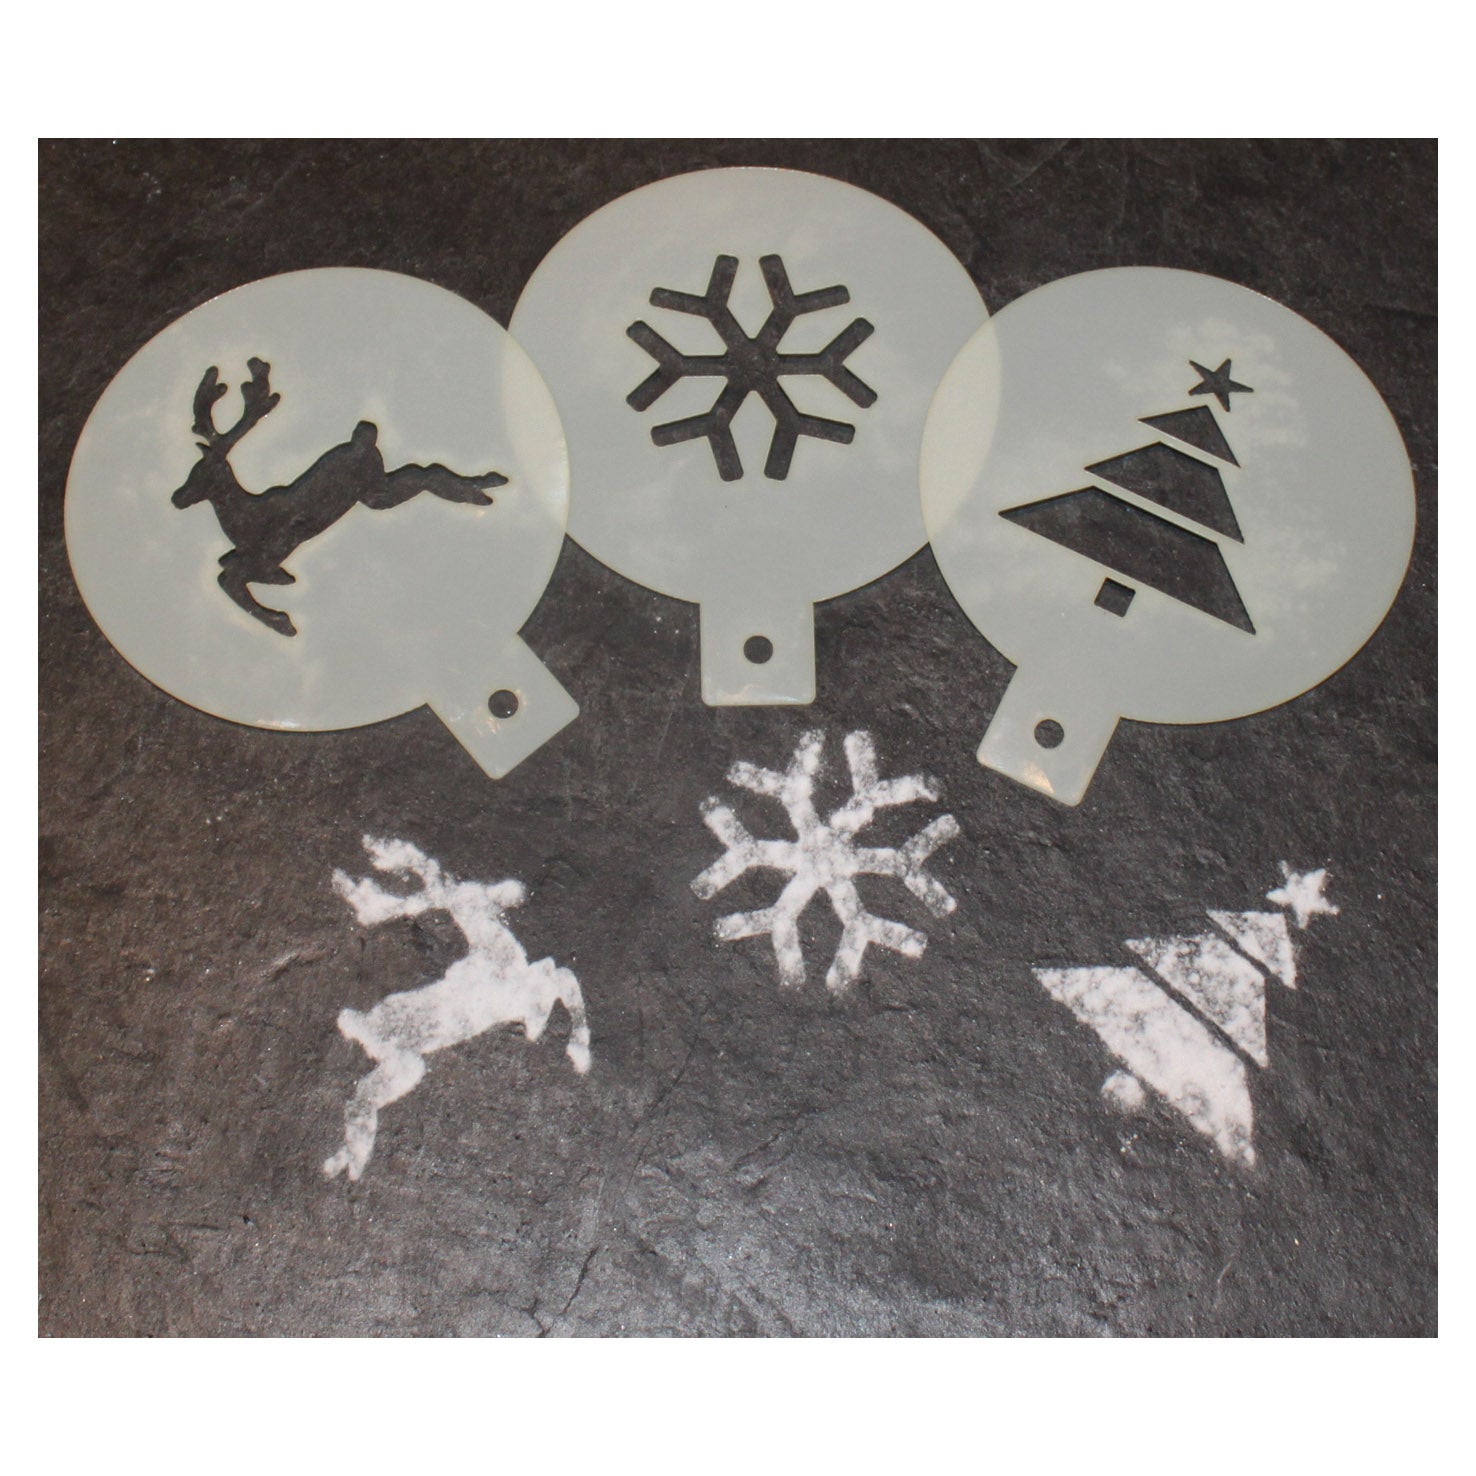 CraftStar Christmas Coffee Duster Stencils - Set of 3